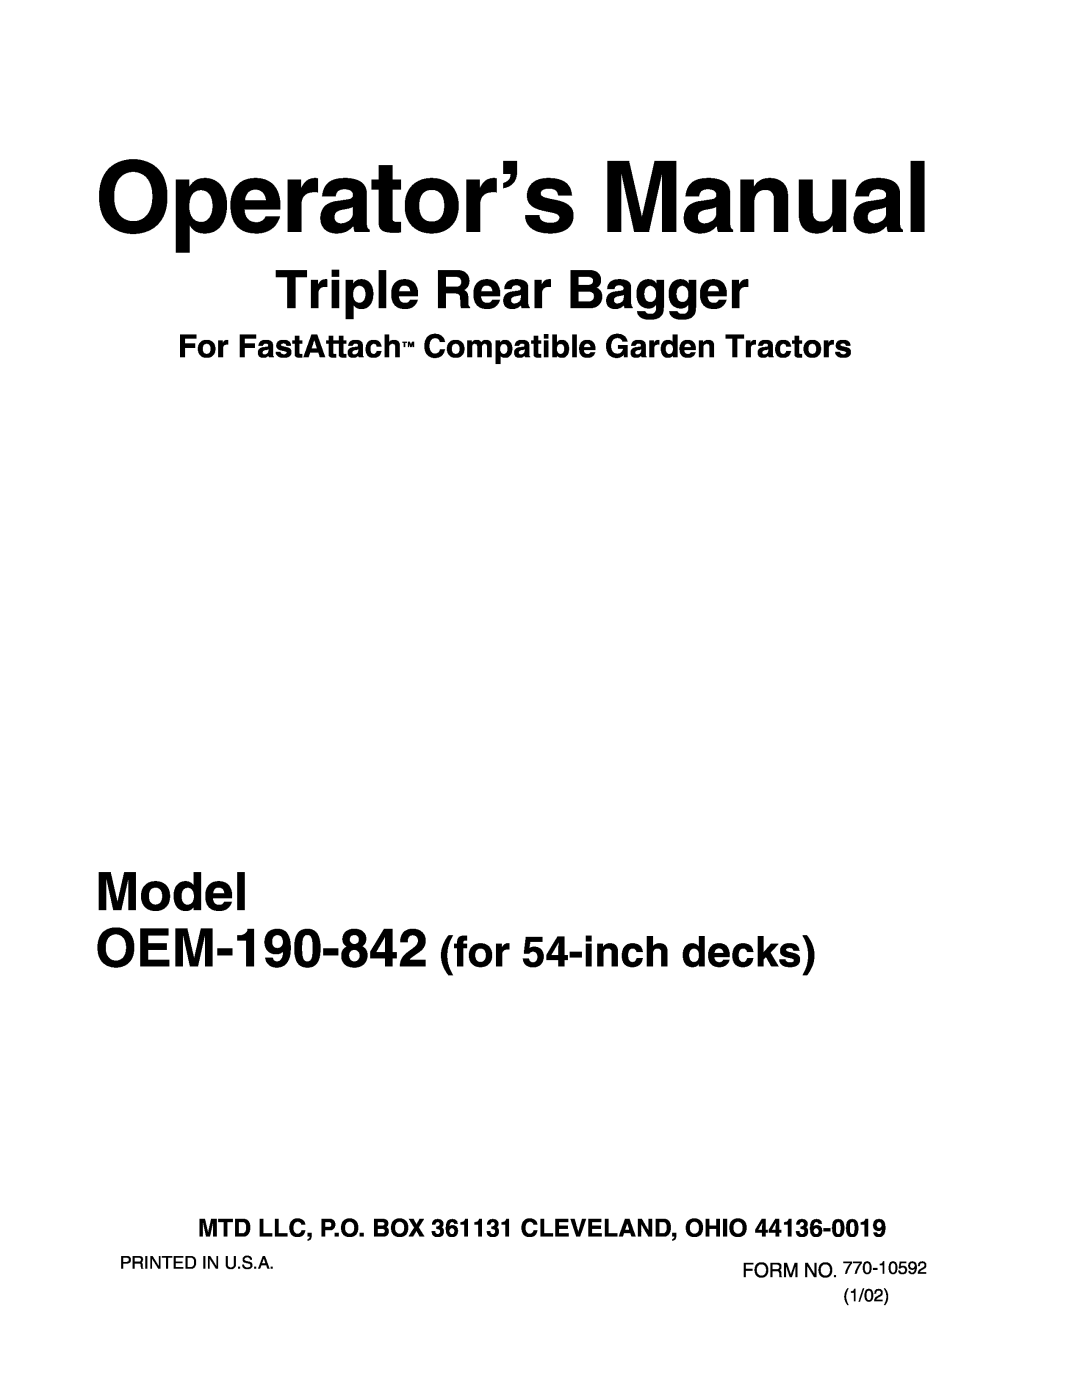 MTD Lawn Tracto manual For FastAttach Compatible Garden Tractors, Operator’s Manual, Triple Rear Bagger, Model 